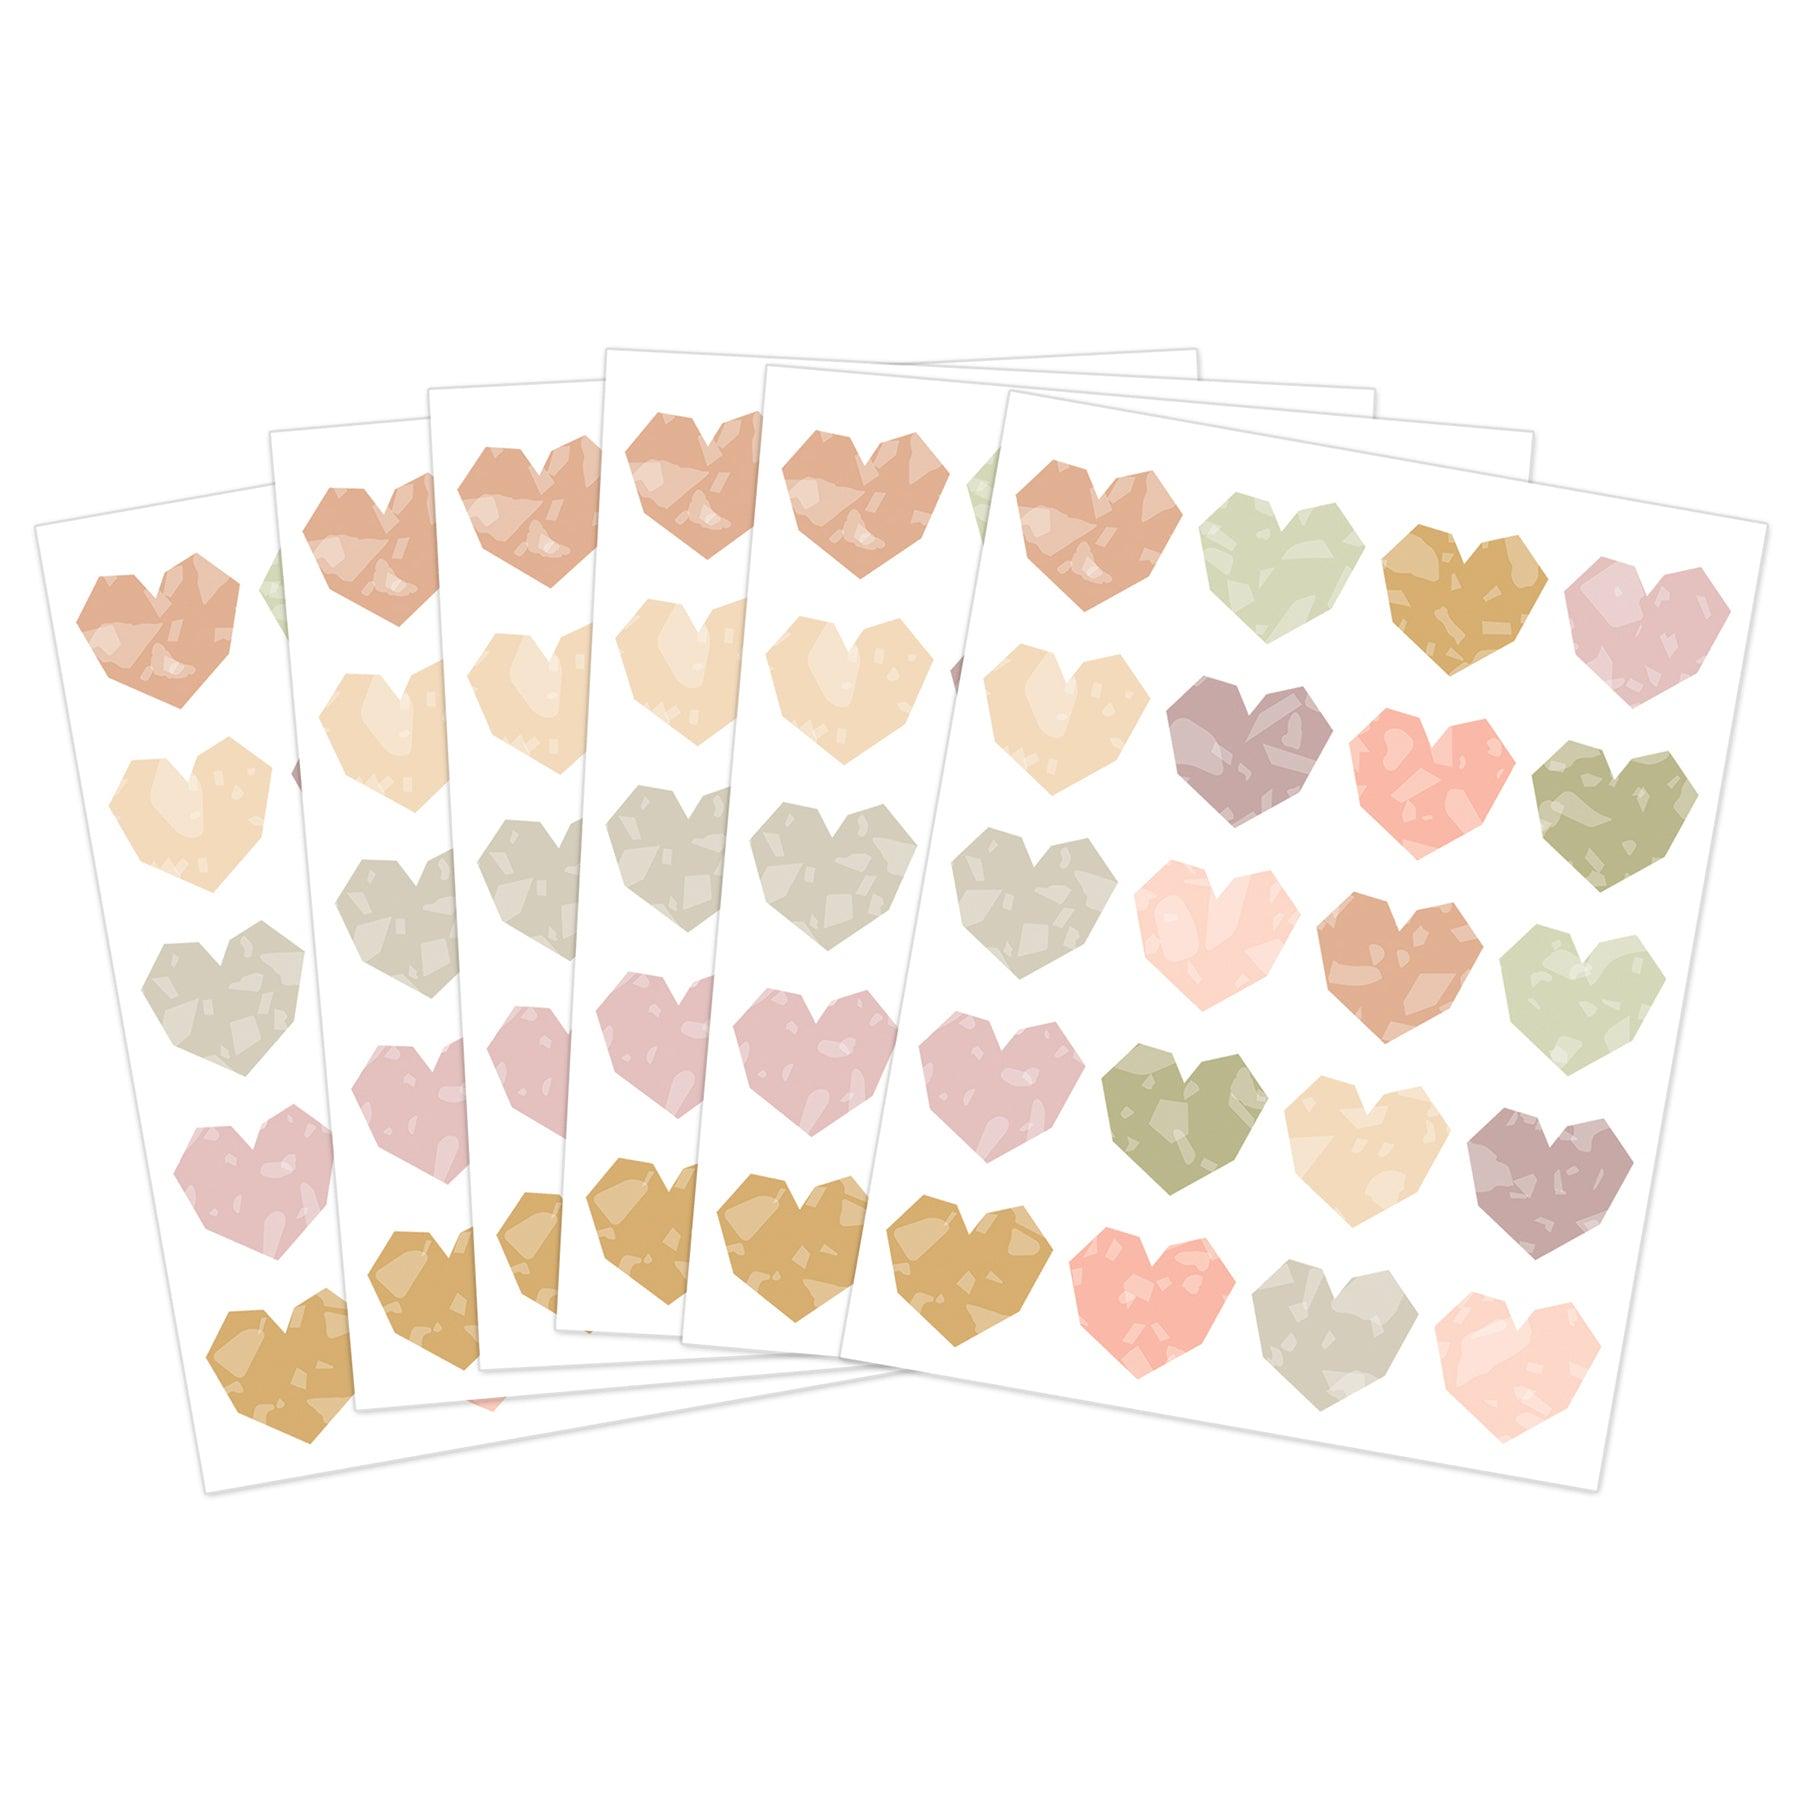 Terrazzo Tones Hearts Stickers, 120 Per Pack, 12 Packs - Loomini